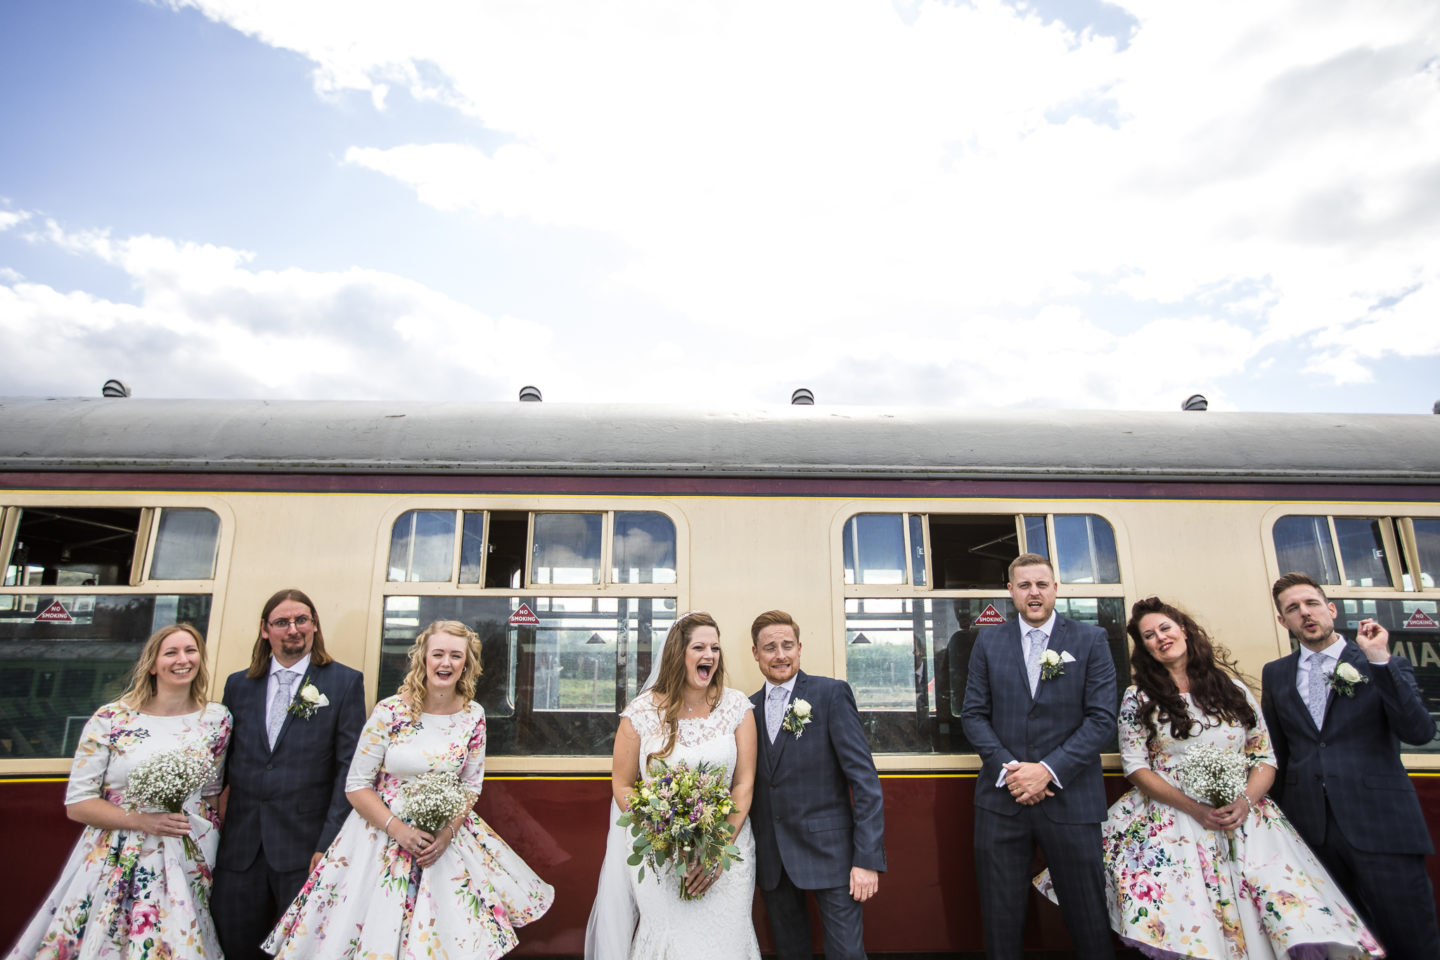 Vintage Disney Inspired Wedding at Buckinghamshire Railway Centre